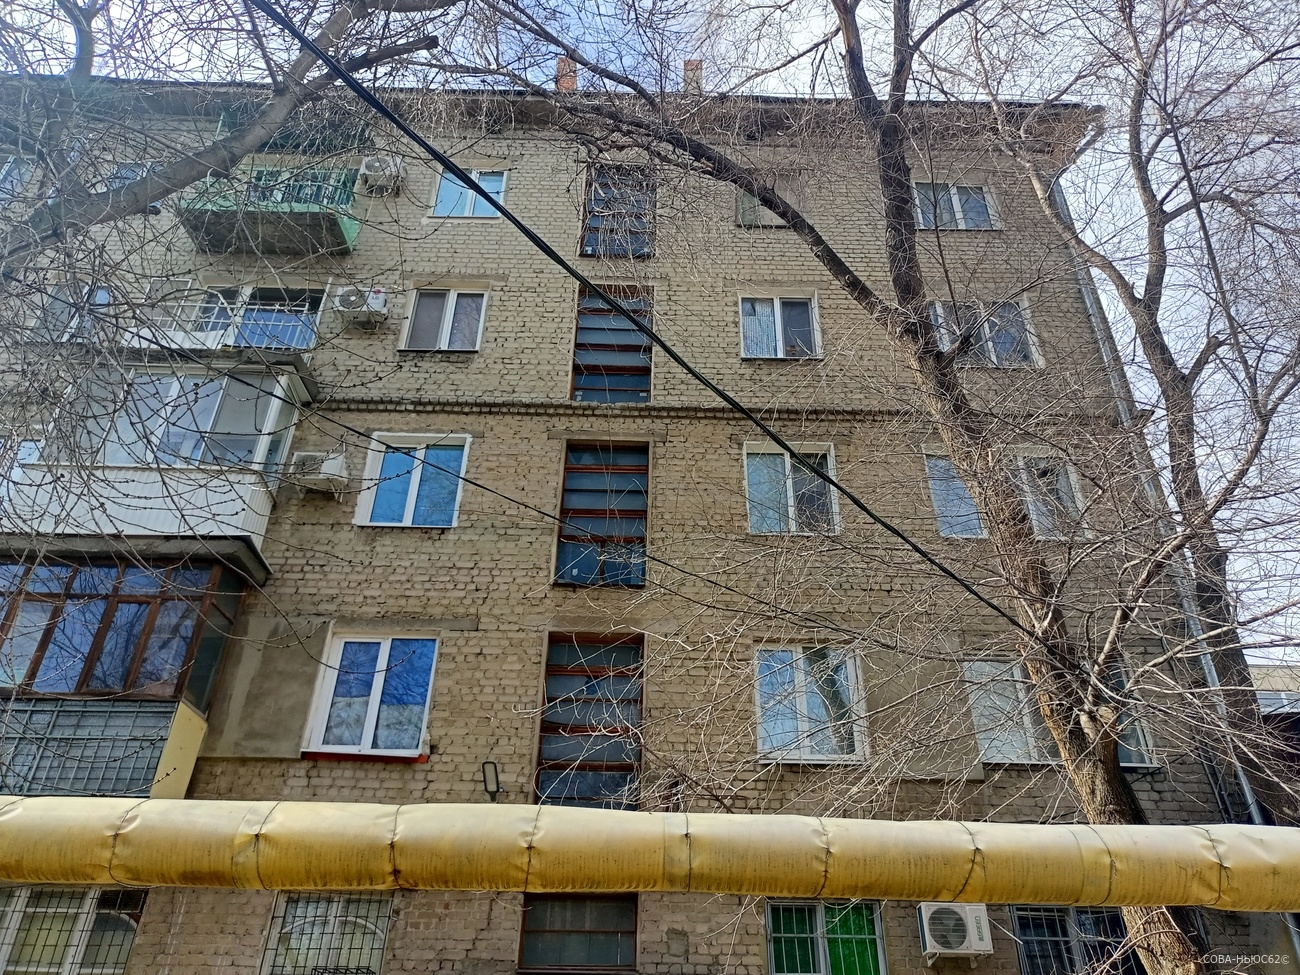 Рязань заняла 29-е место в РФ по доходности инвестиций в недвижимость